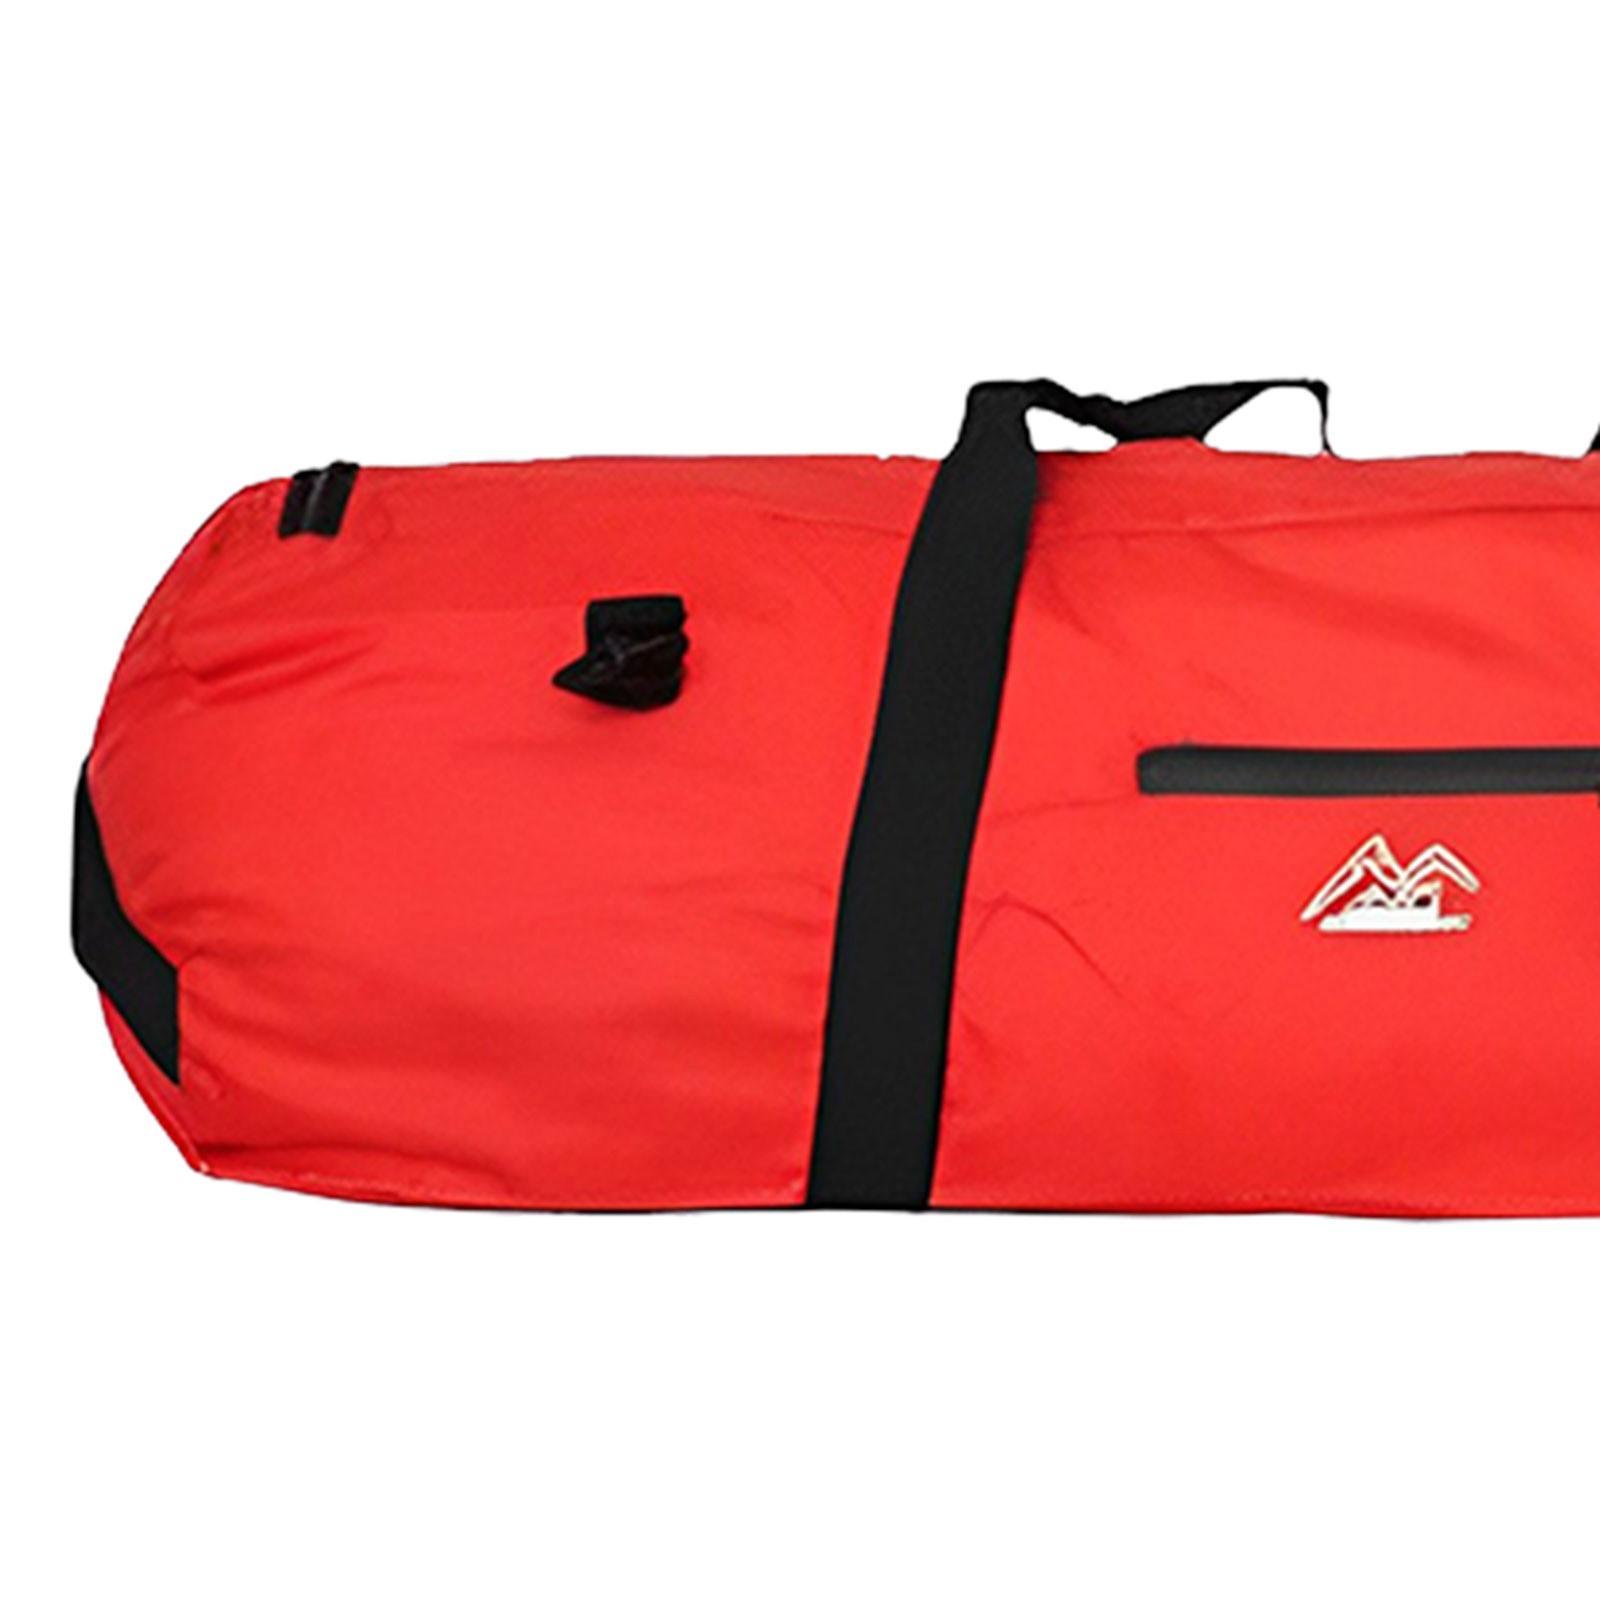 Foldable Camping Storage Overnight Bag Large Capacity Travel Duffel Tote Bag